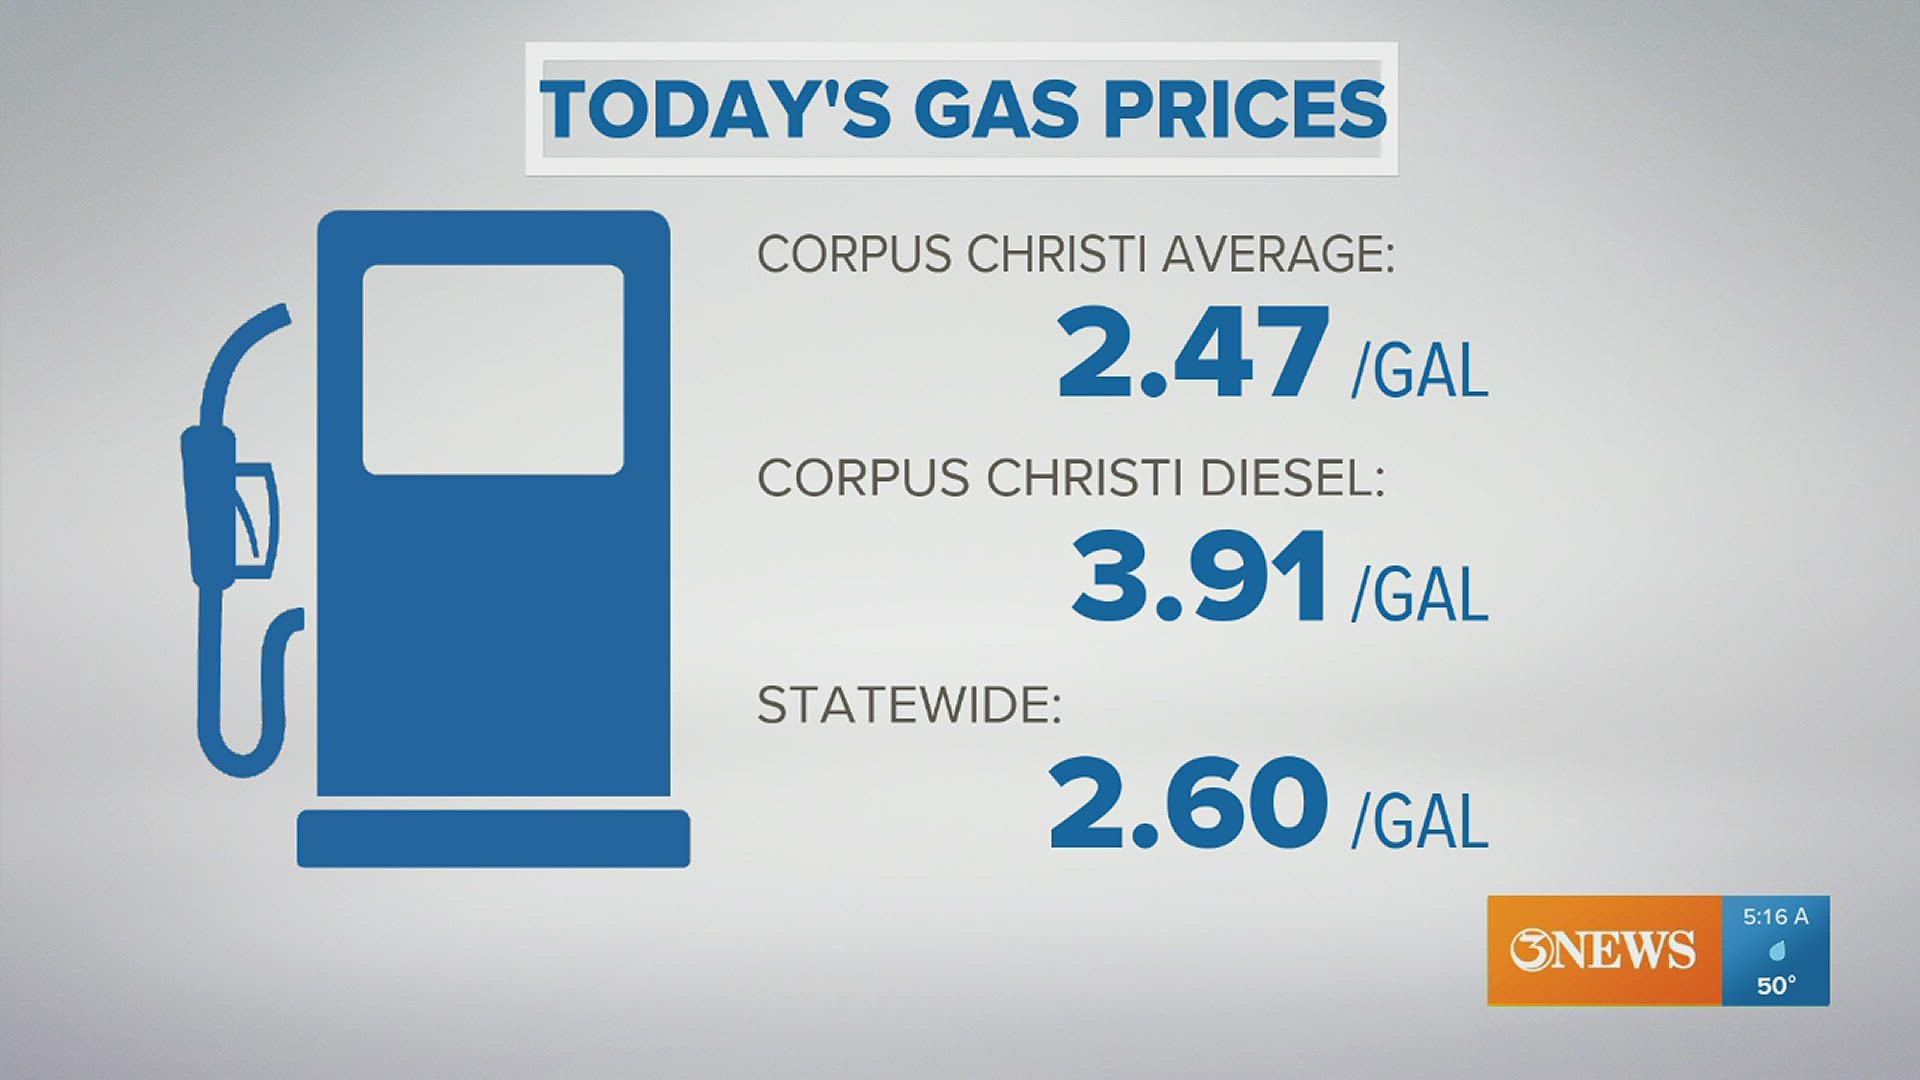 In Corpus Christi, a gallon of regular unleaded is averaging at $2.47.